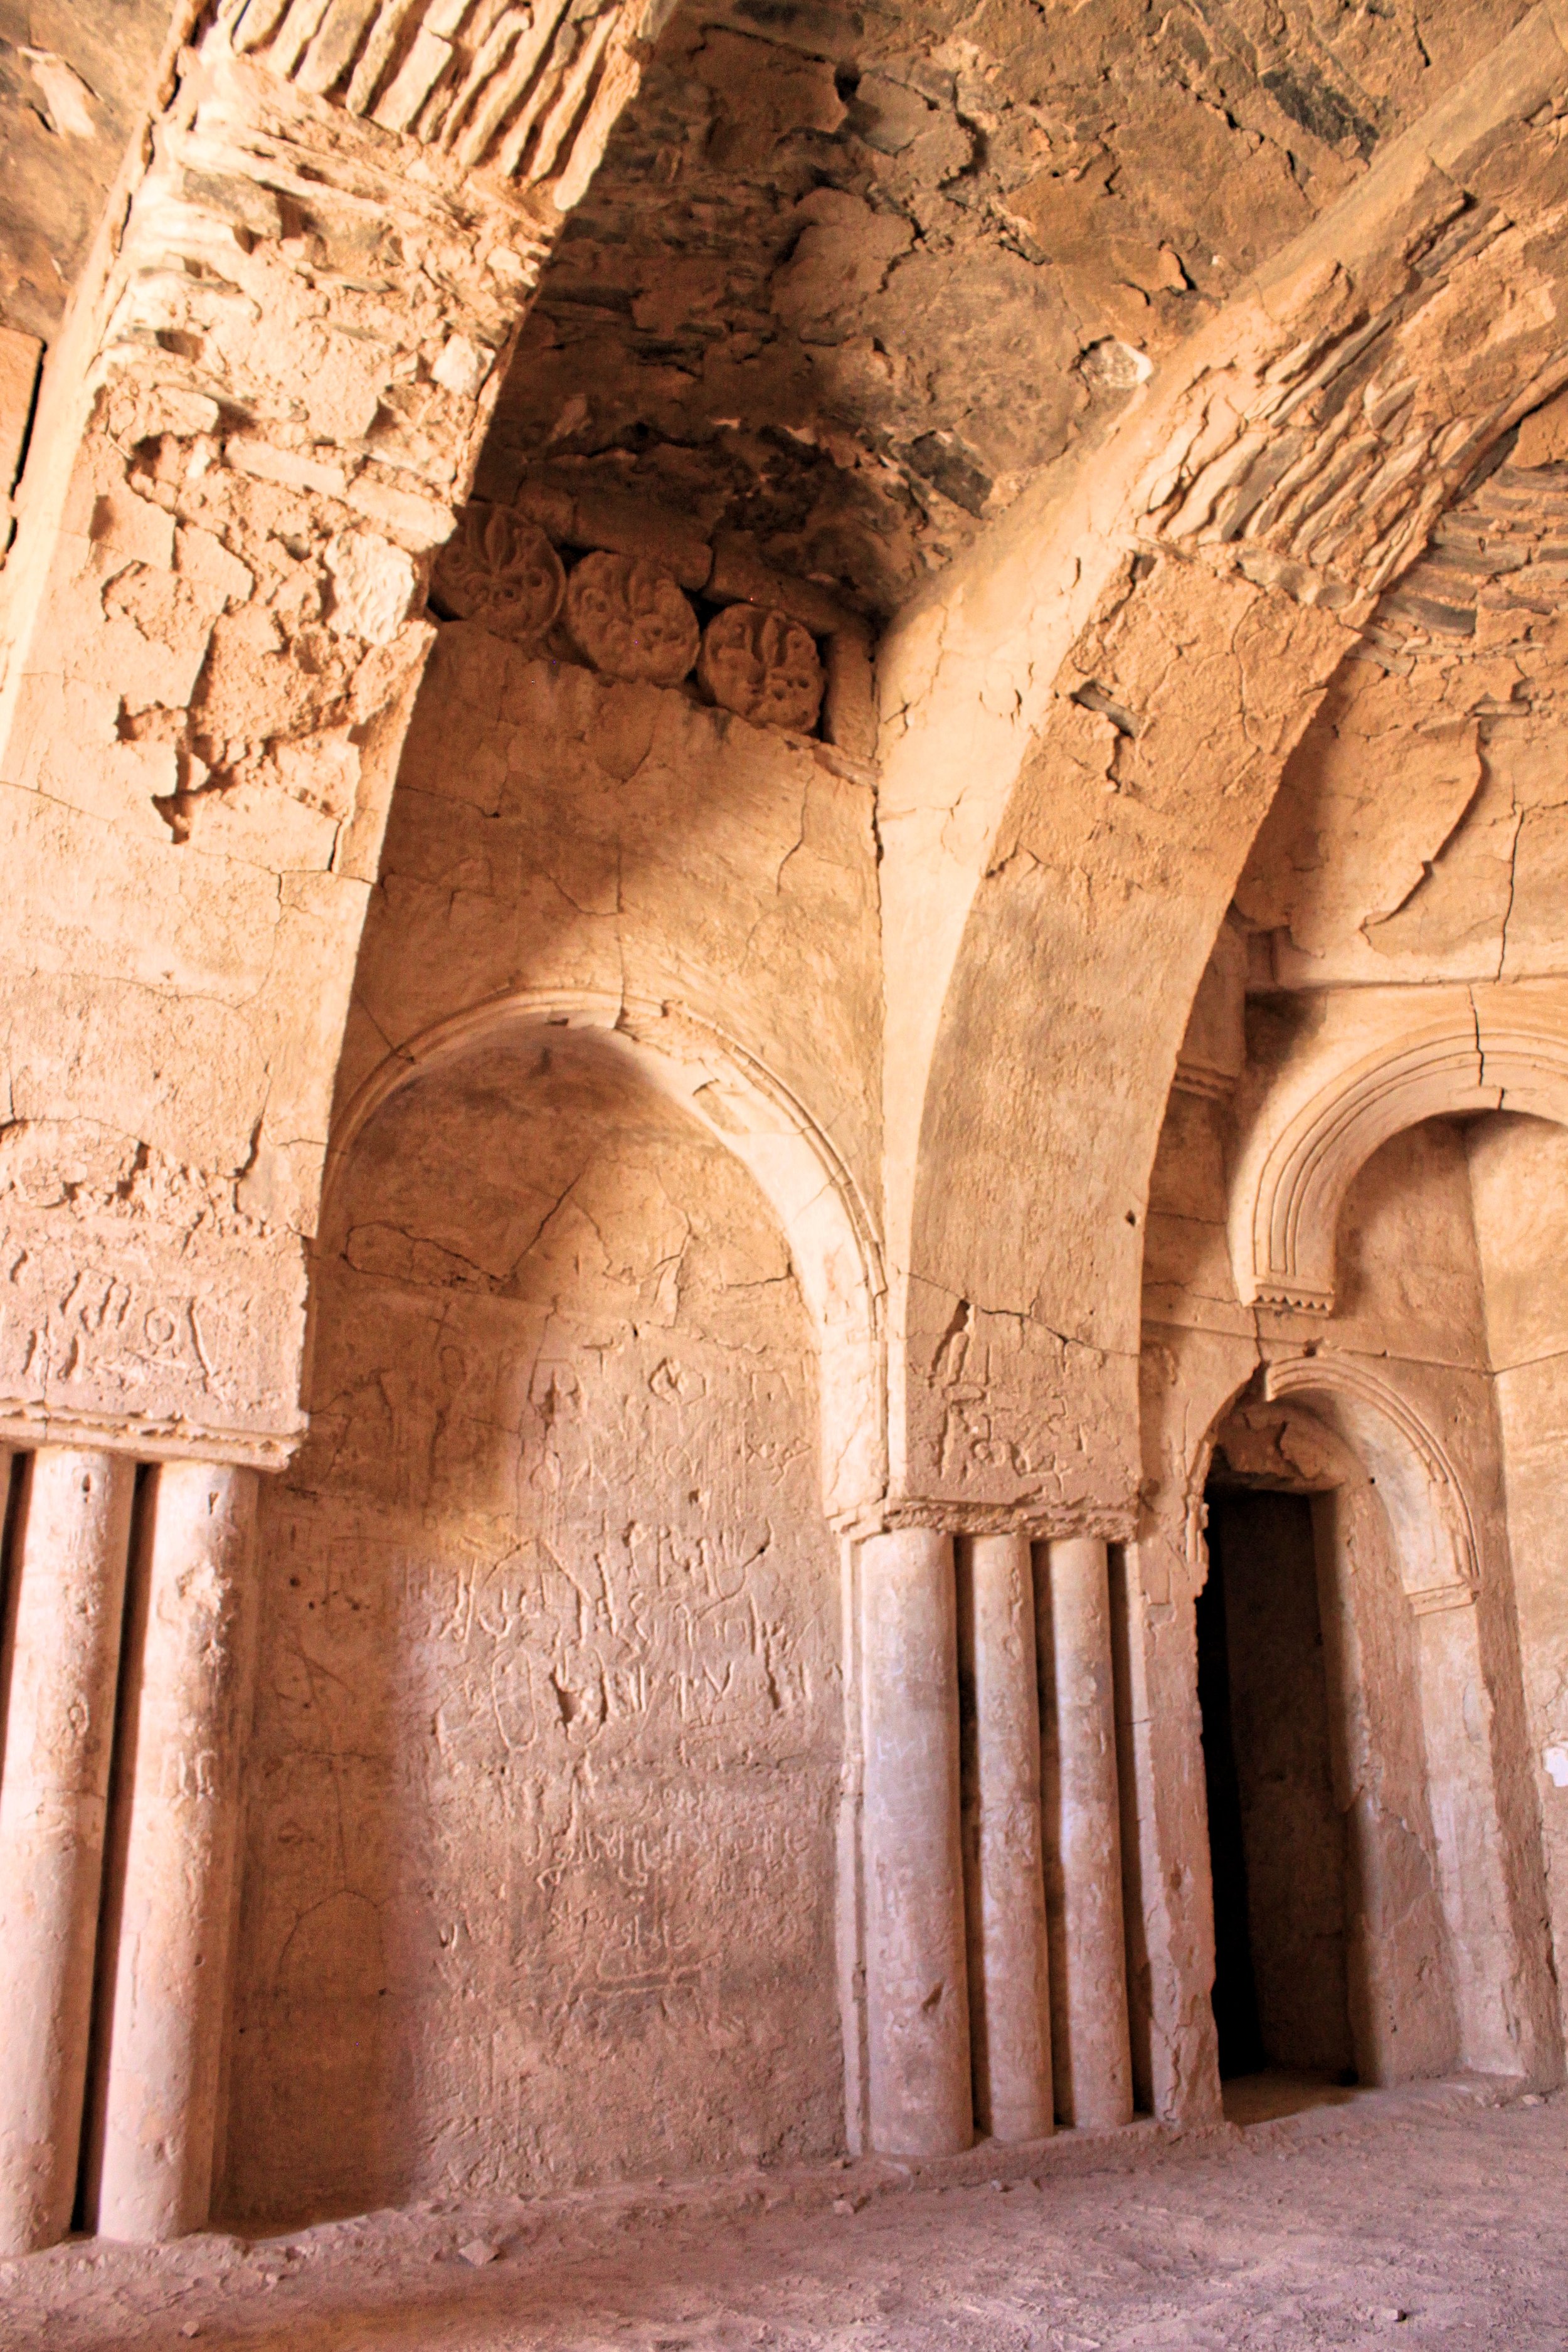 Qasr Al-Harrana or Qasr Kharana, "Desert Castle" in eastern Jordan